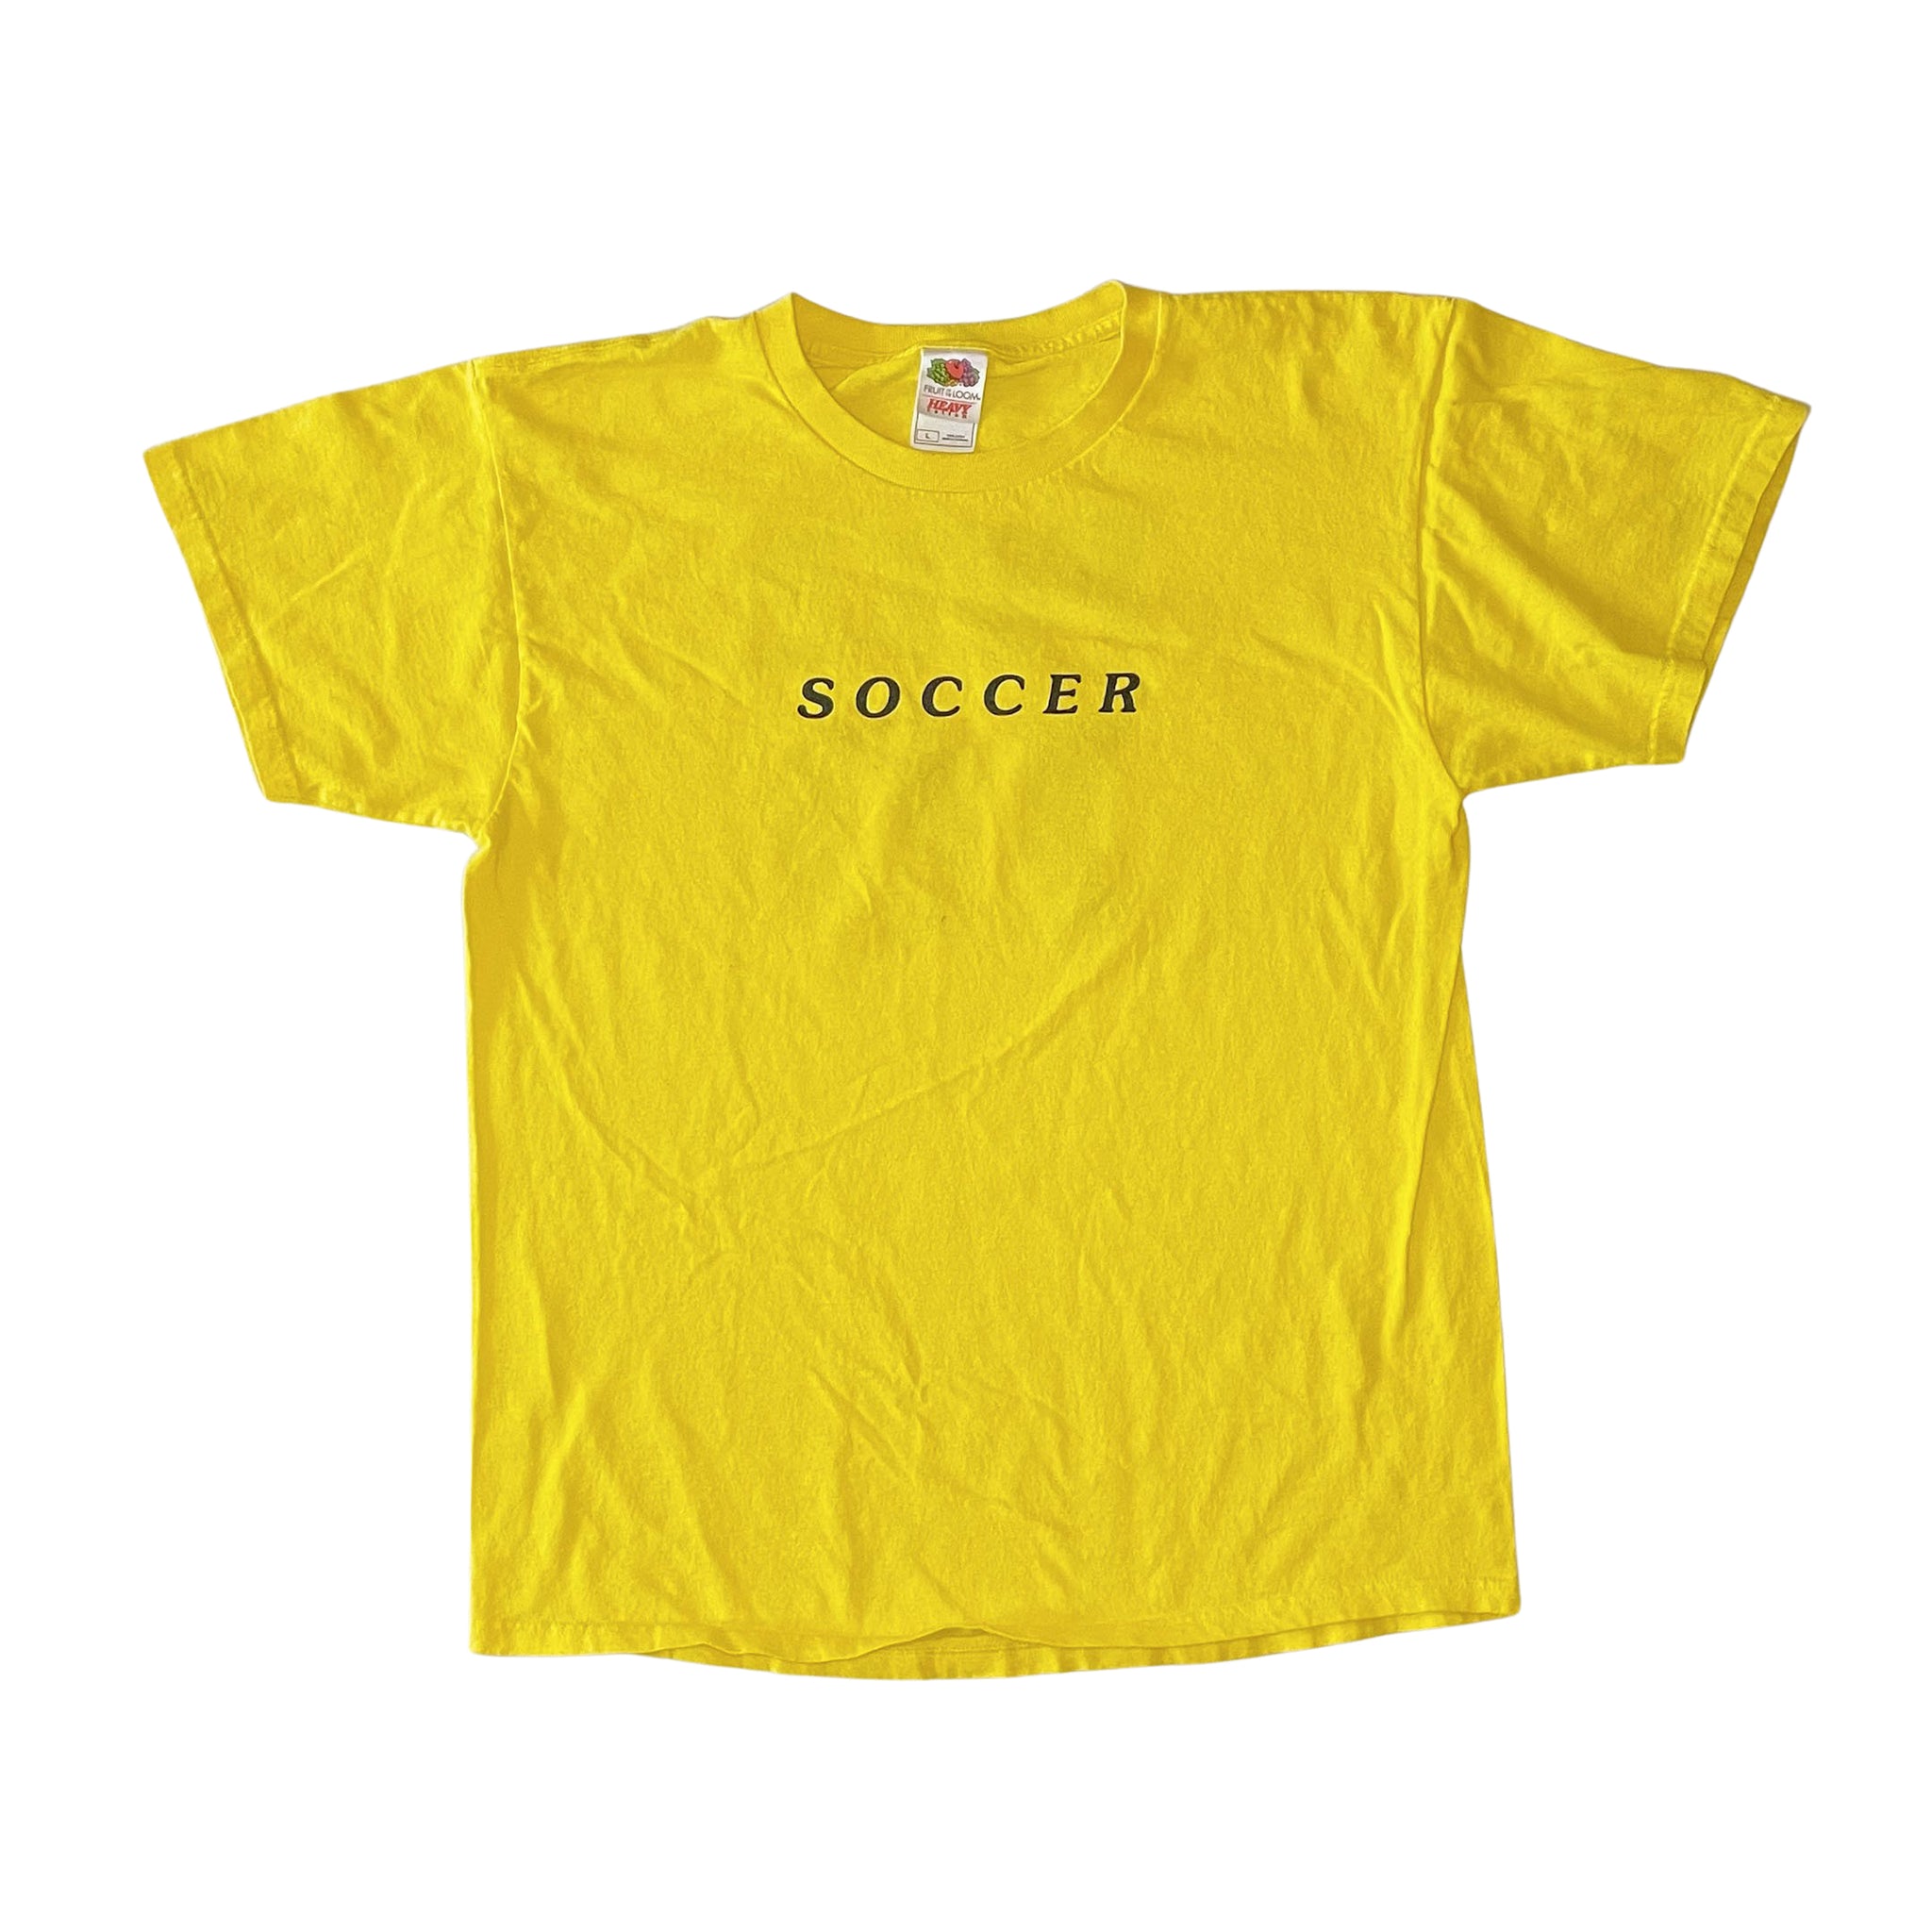 Soccer Pele #10 T-Shirt - M